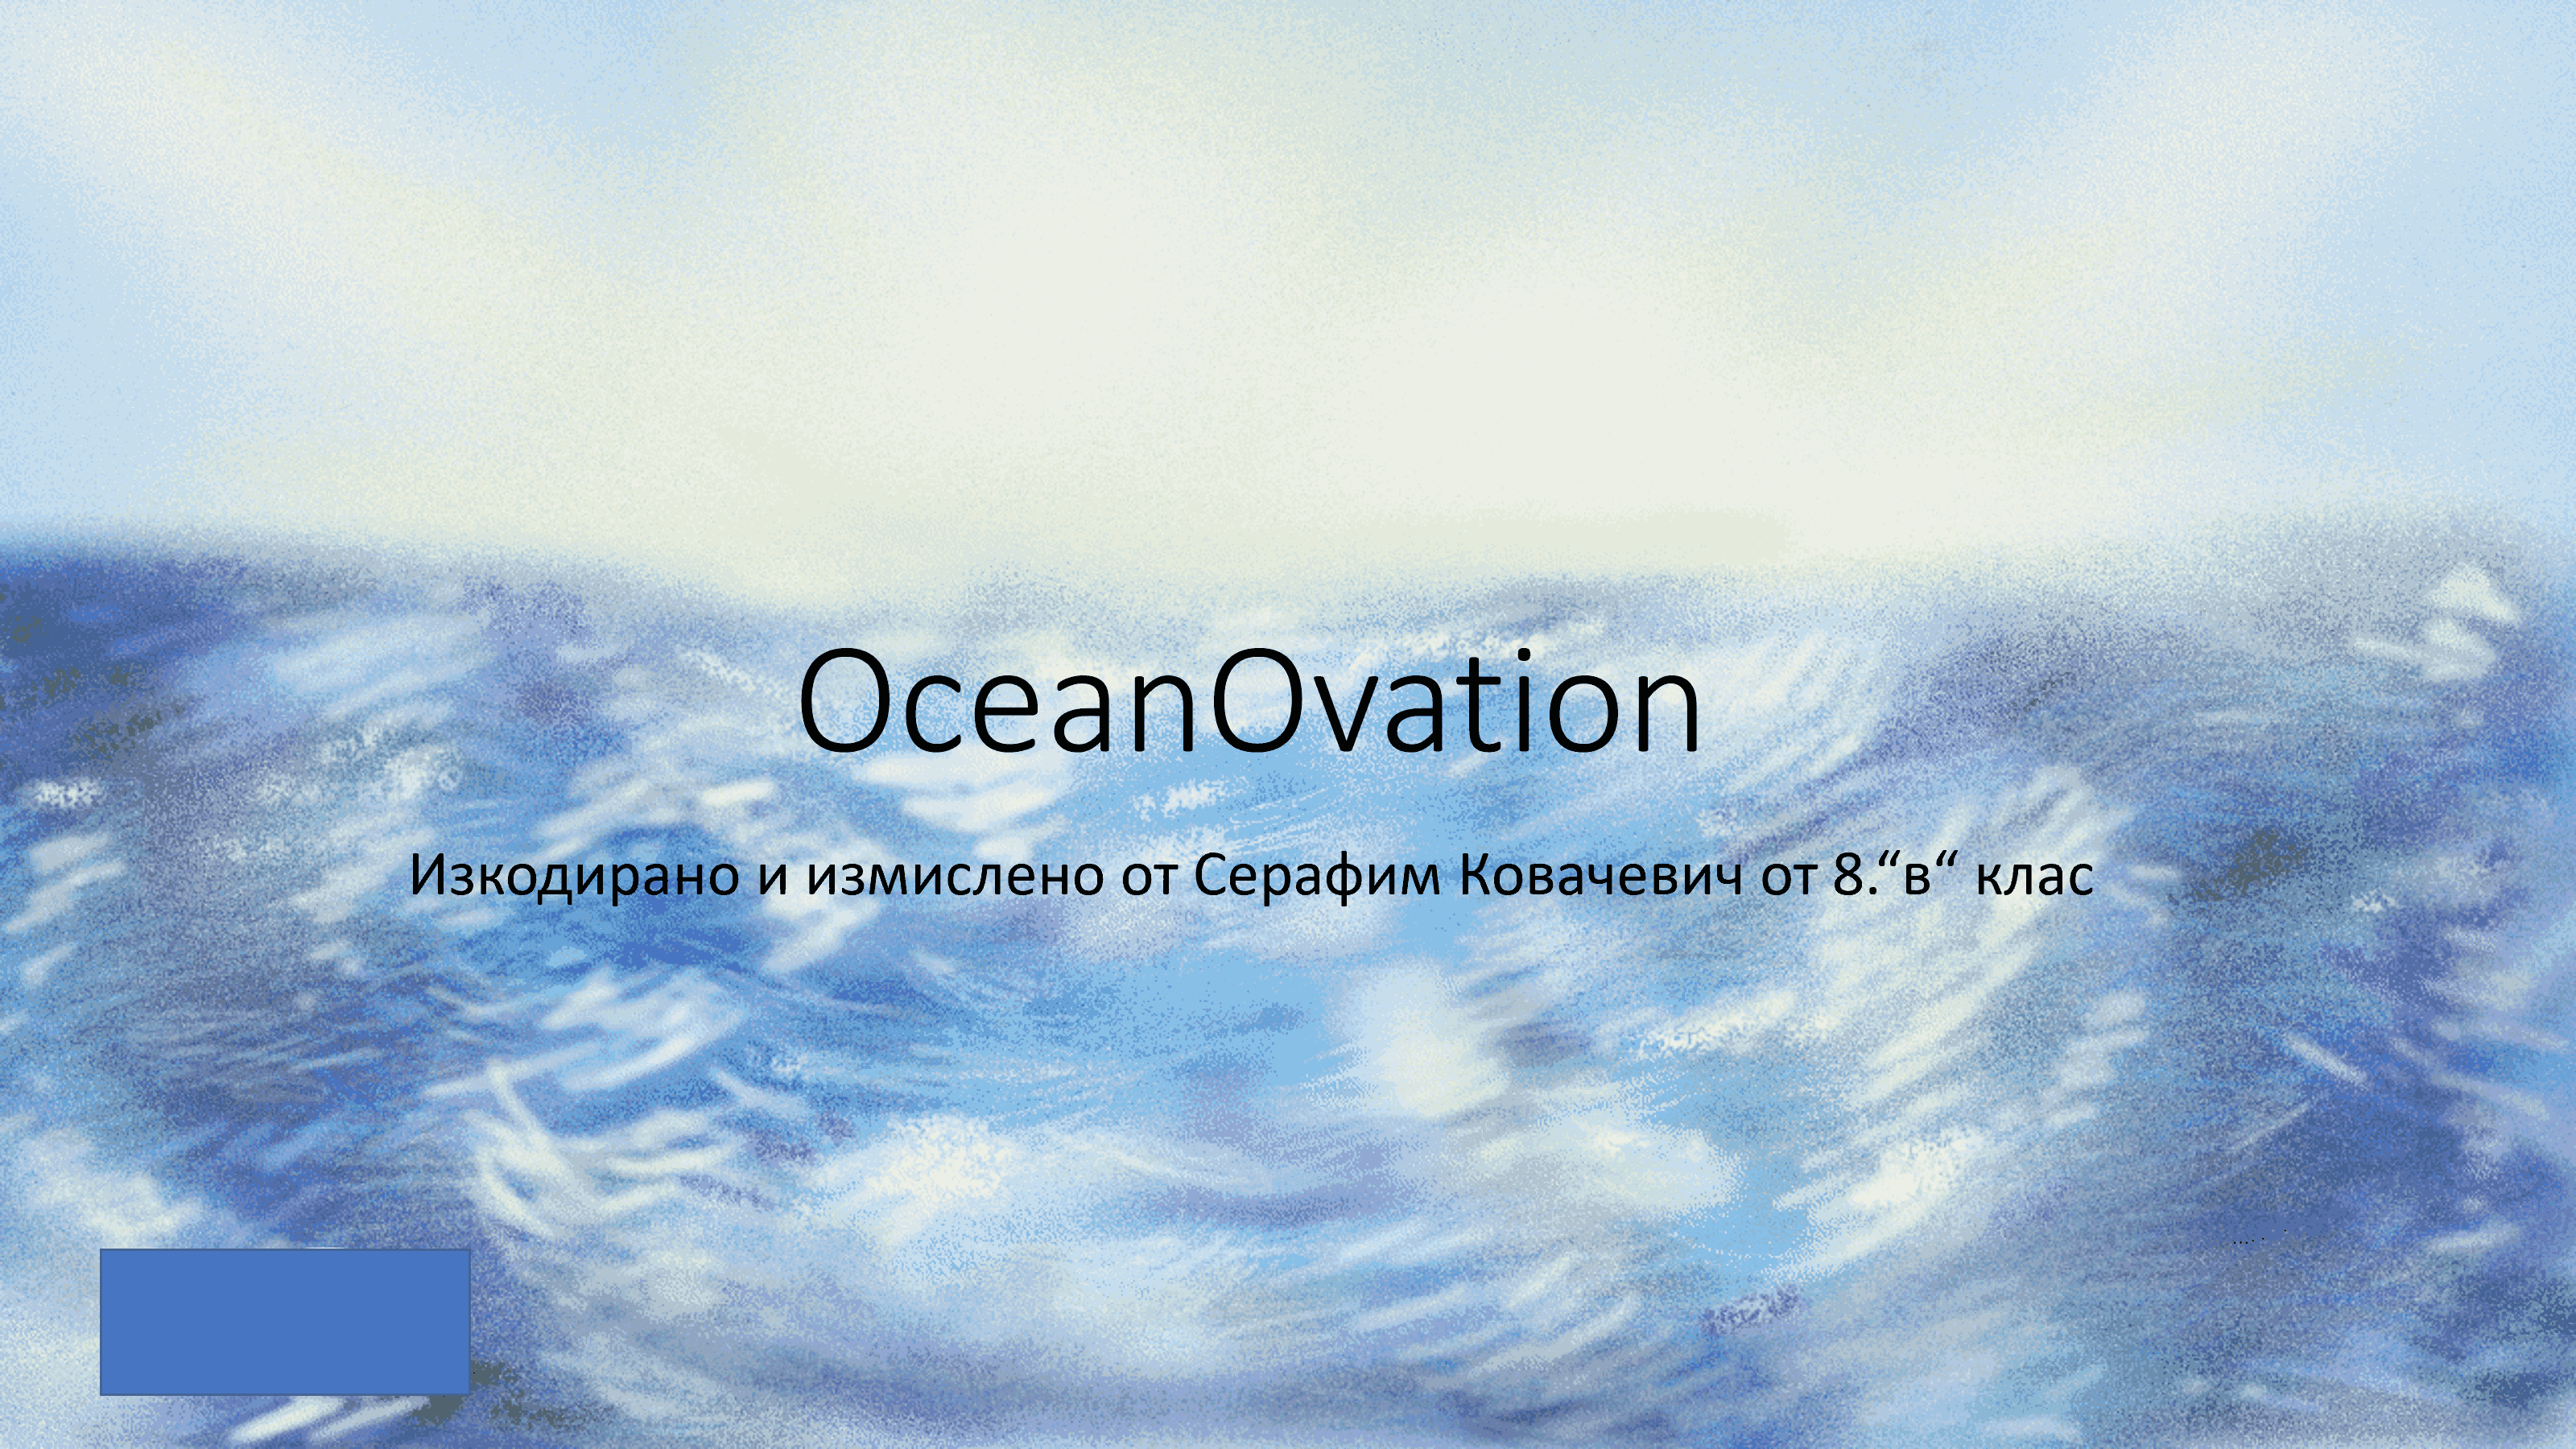 OceanOvation